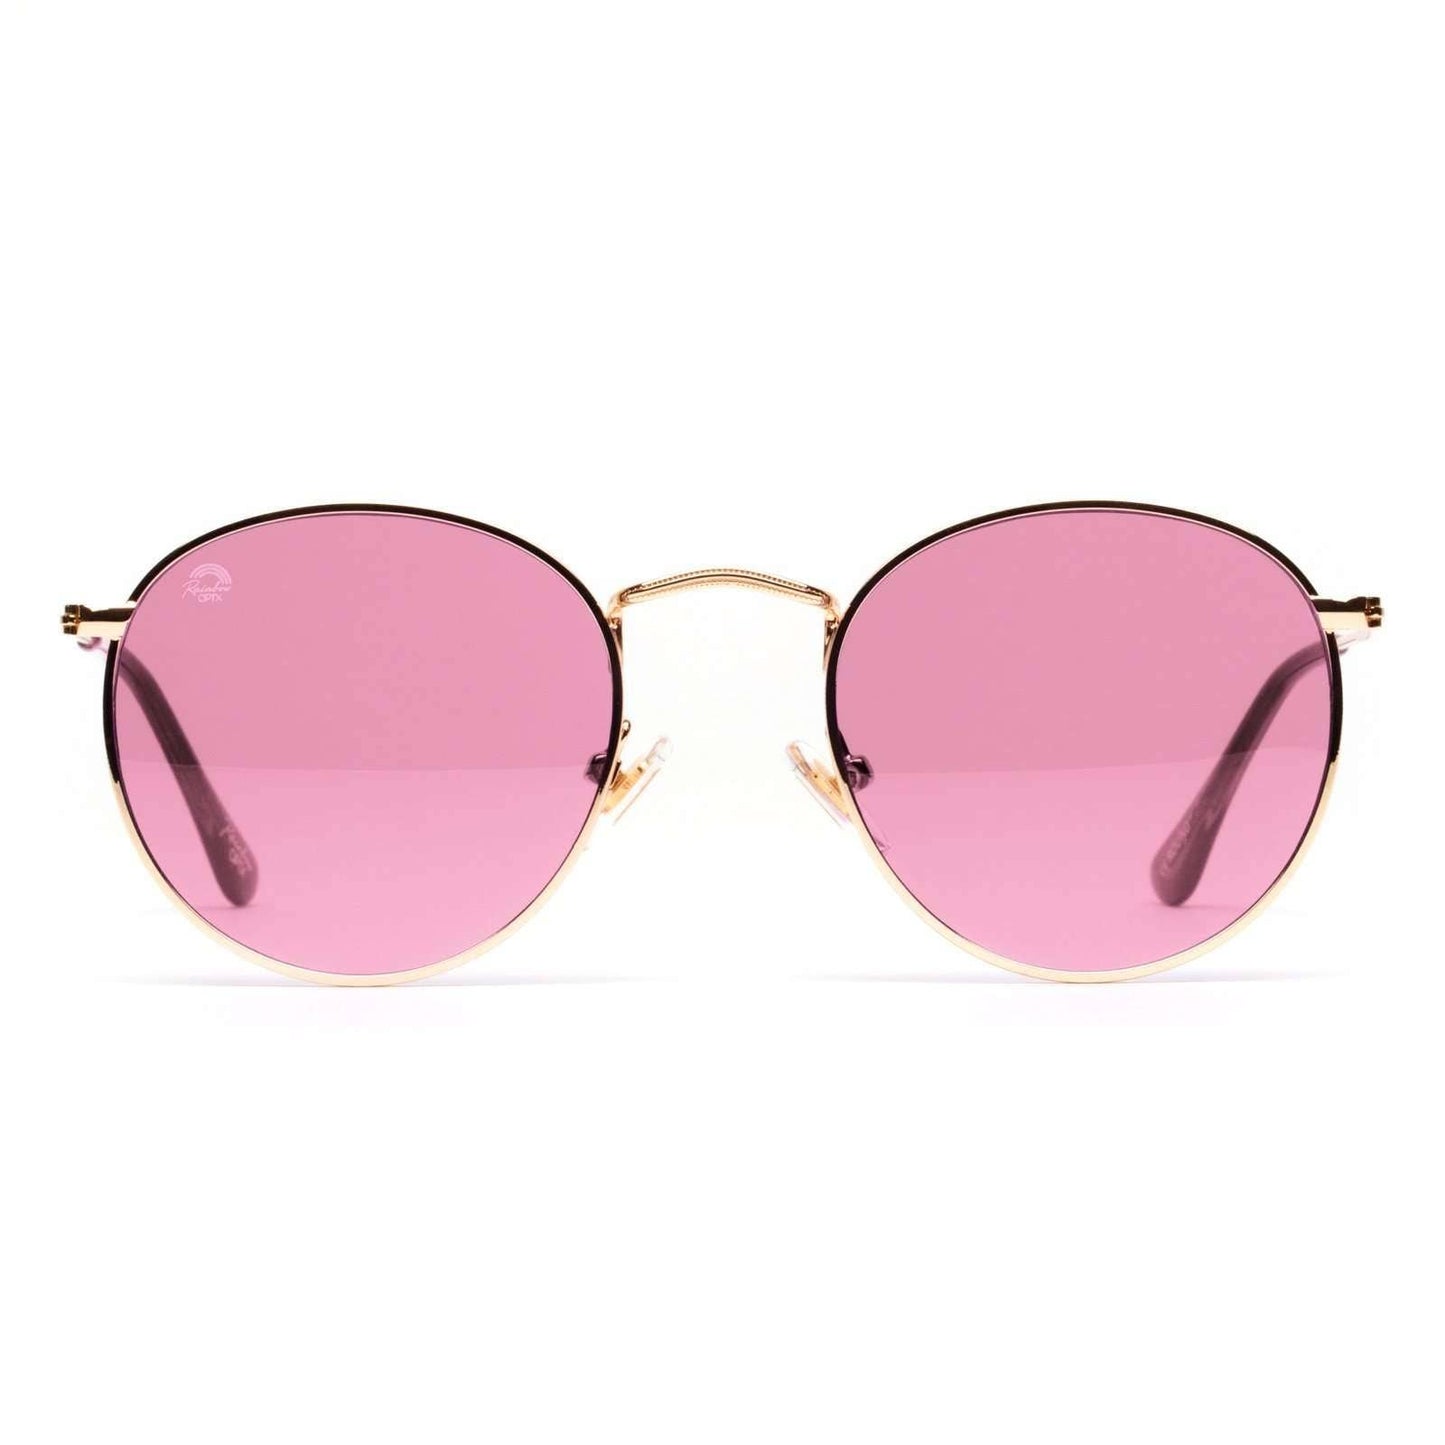 RainbowOPTX Sunglasses Round - Rose-Accessories-Rainbow Optx-Faire-The Twisted Chandelier